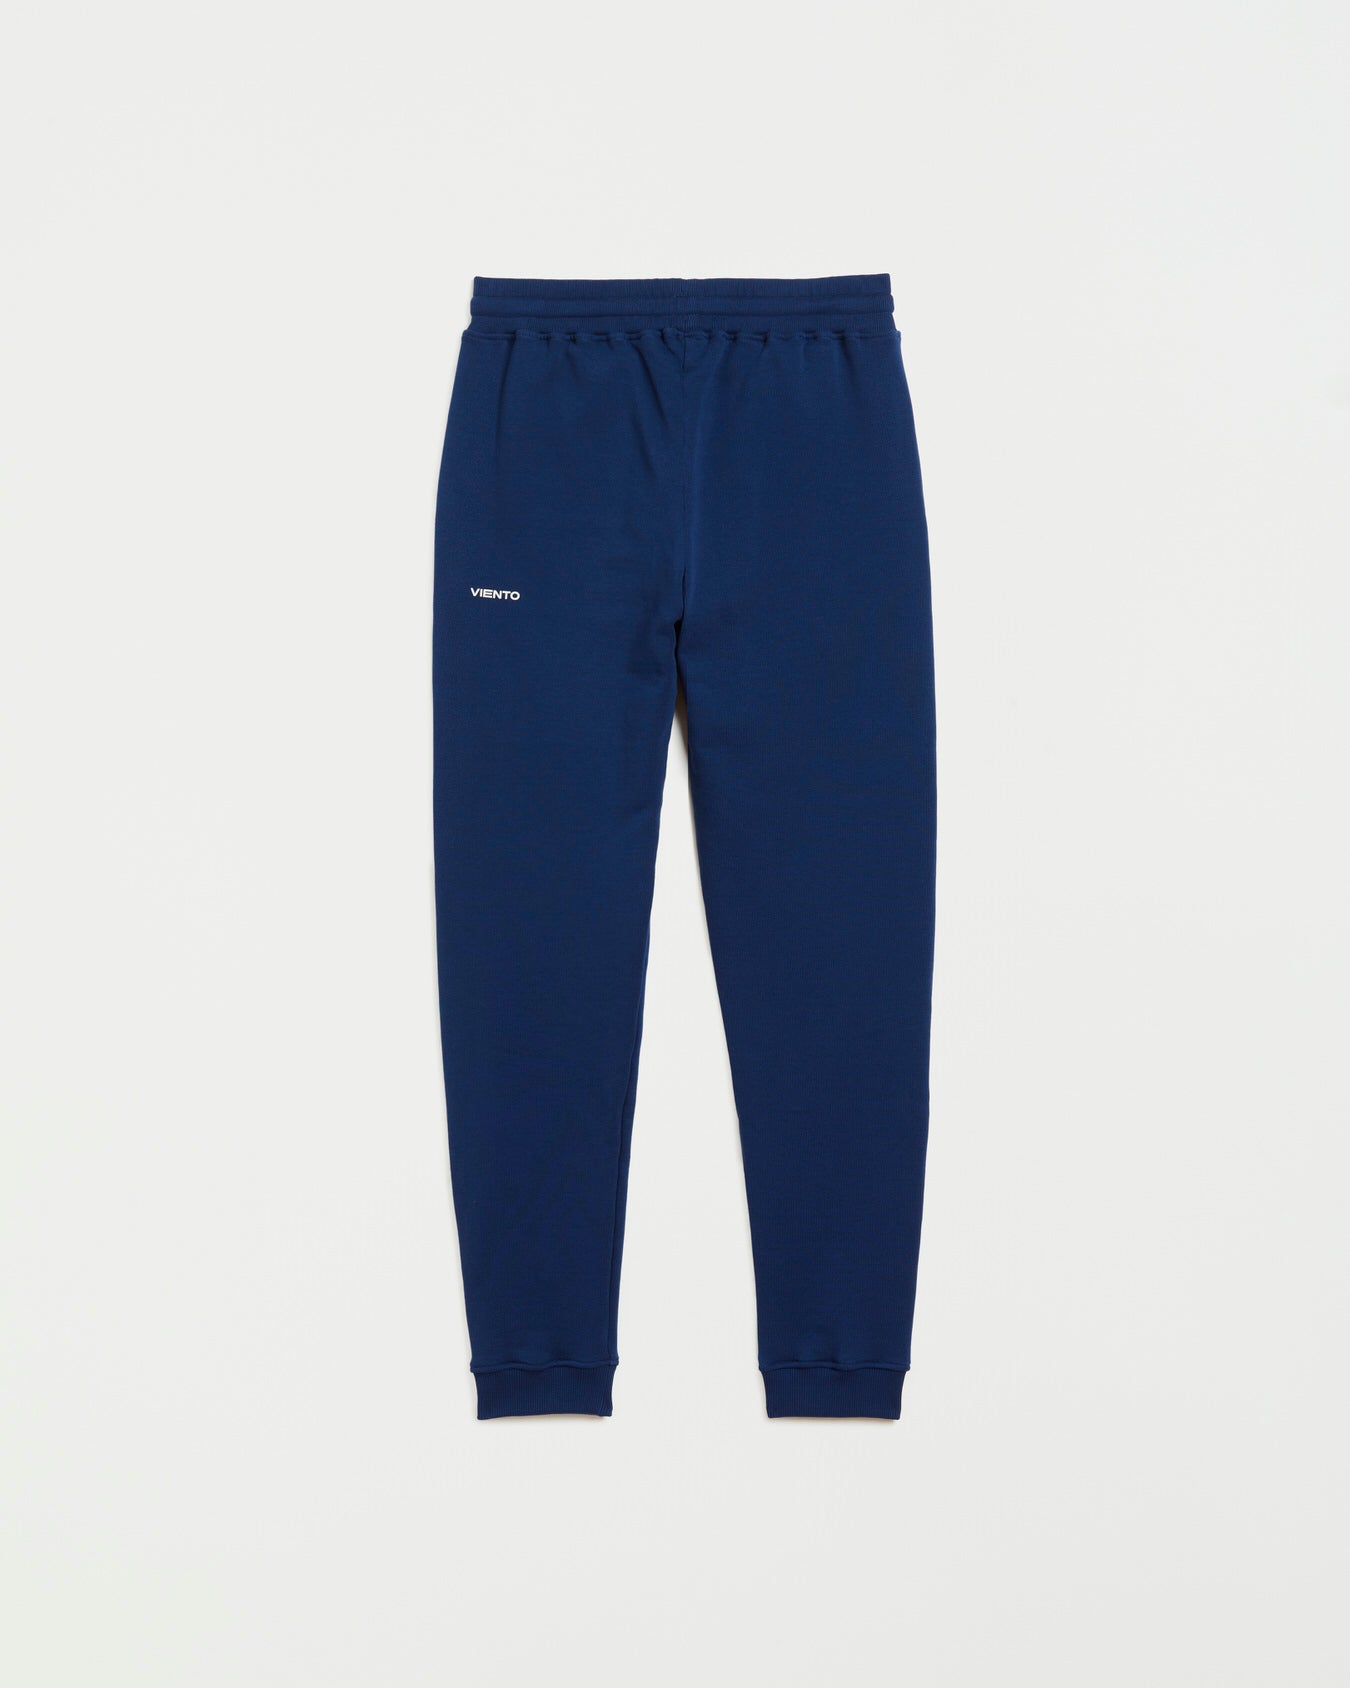 Lifestyle Sweatpants Blue Navy